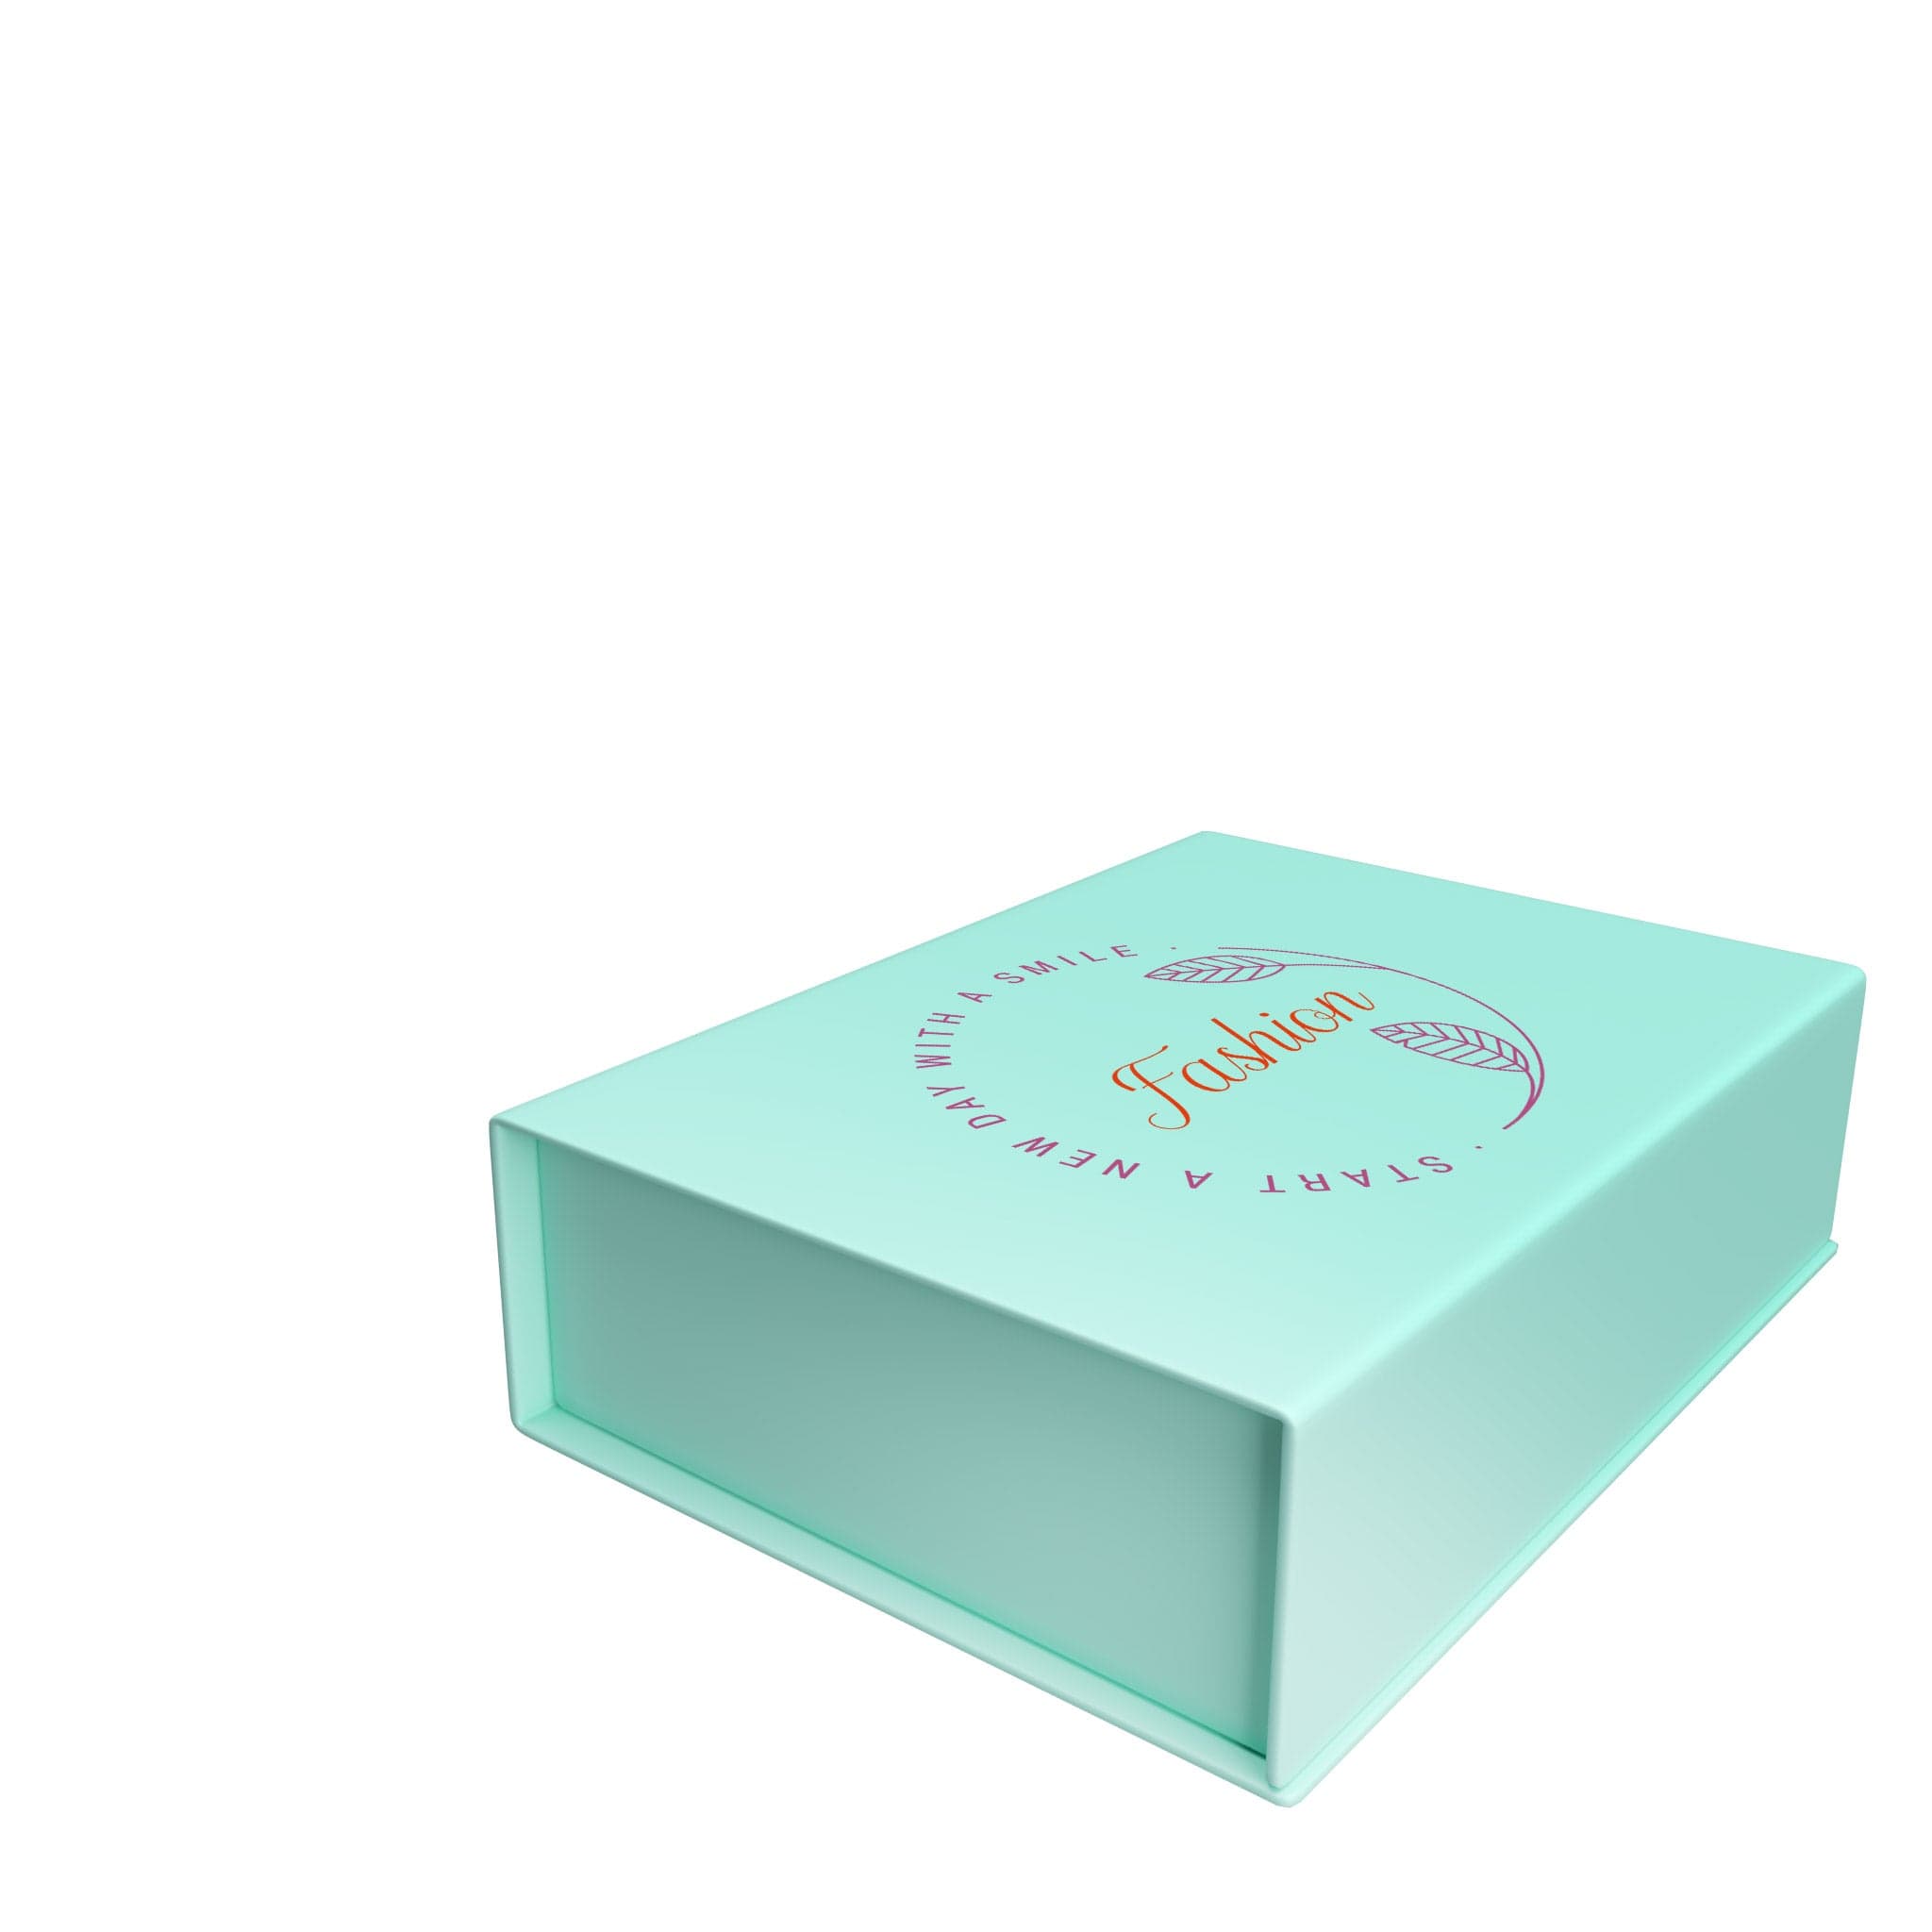 Custom Premium Magnetic Gift Boxes Mint Green Custom Product